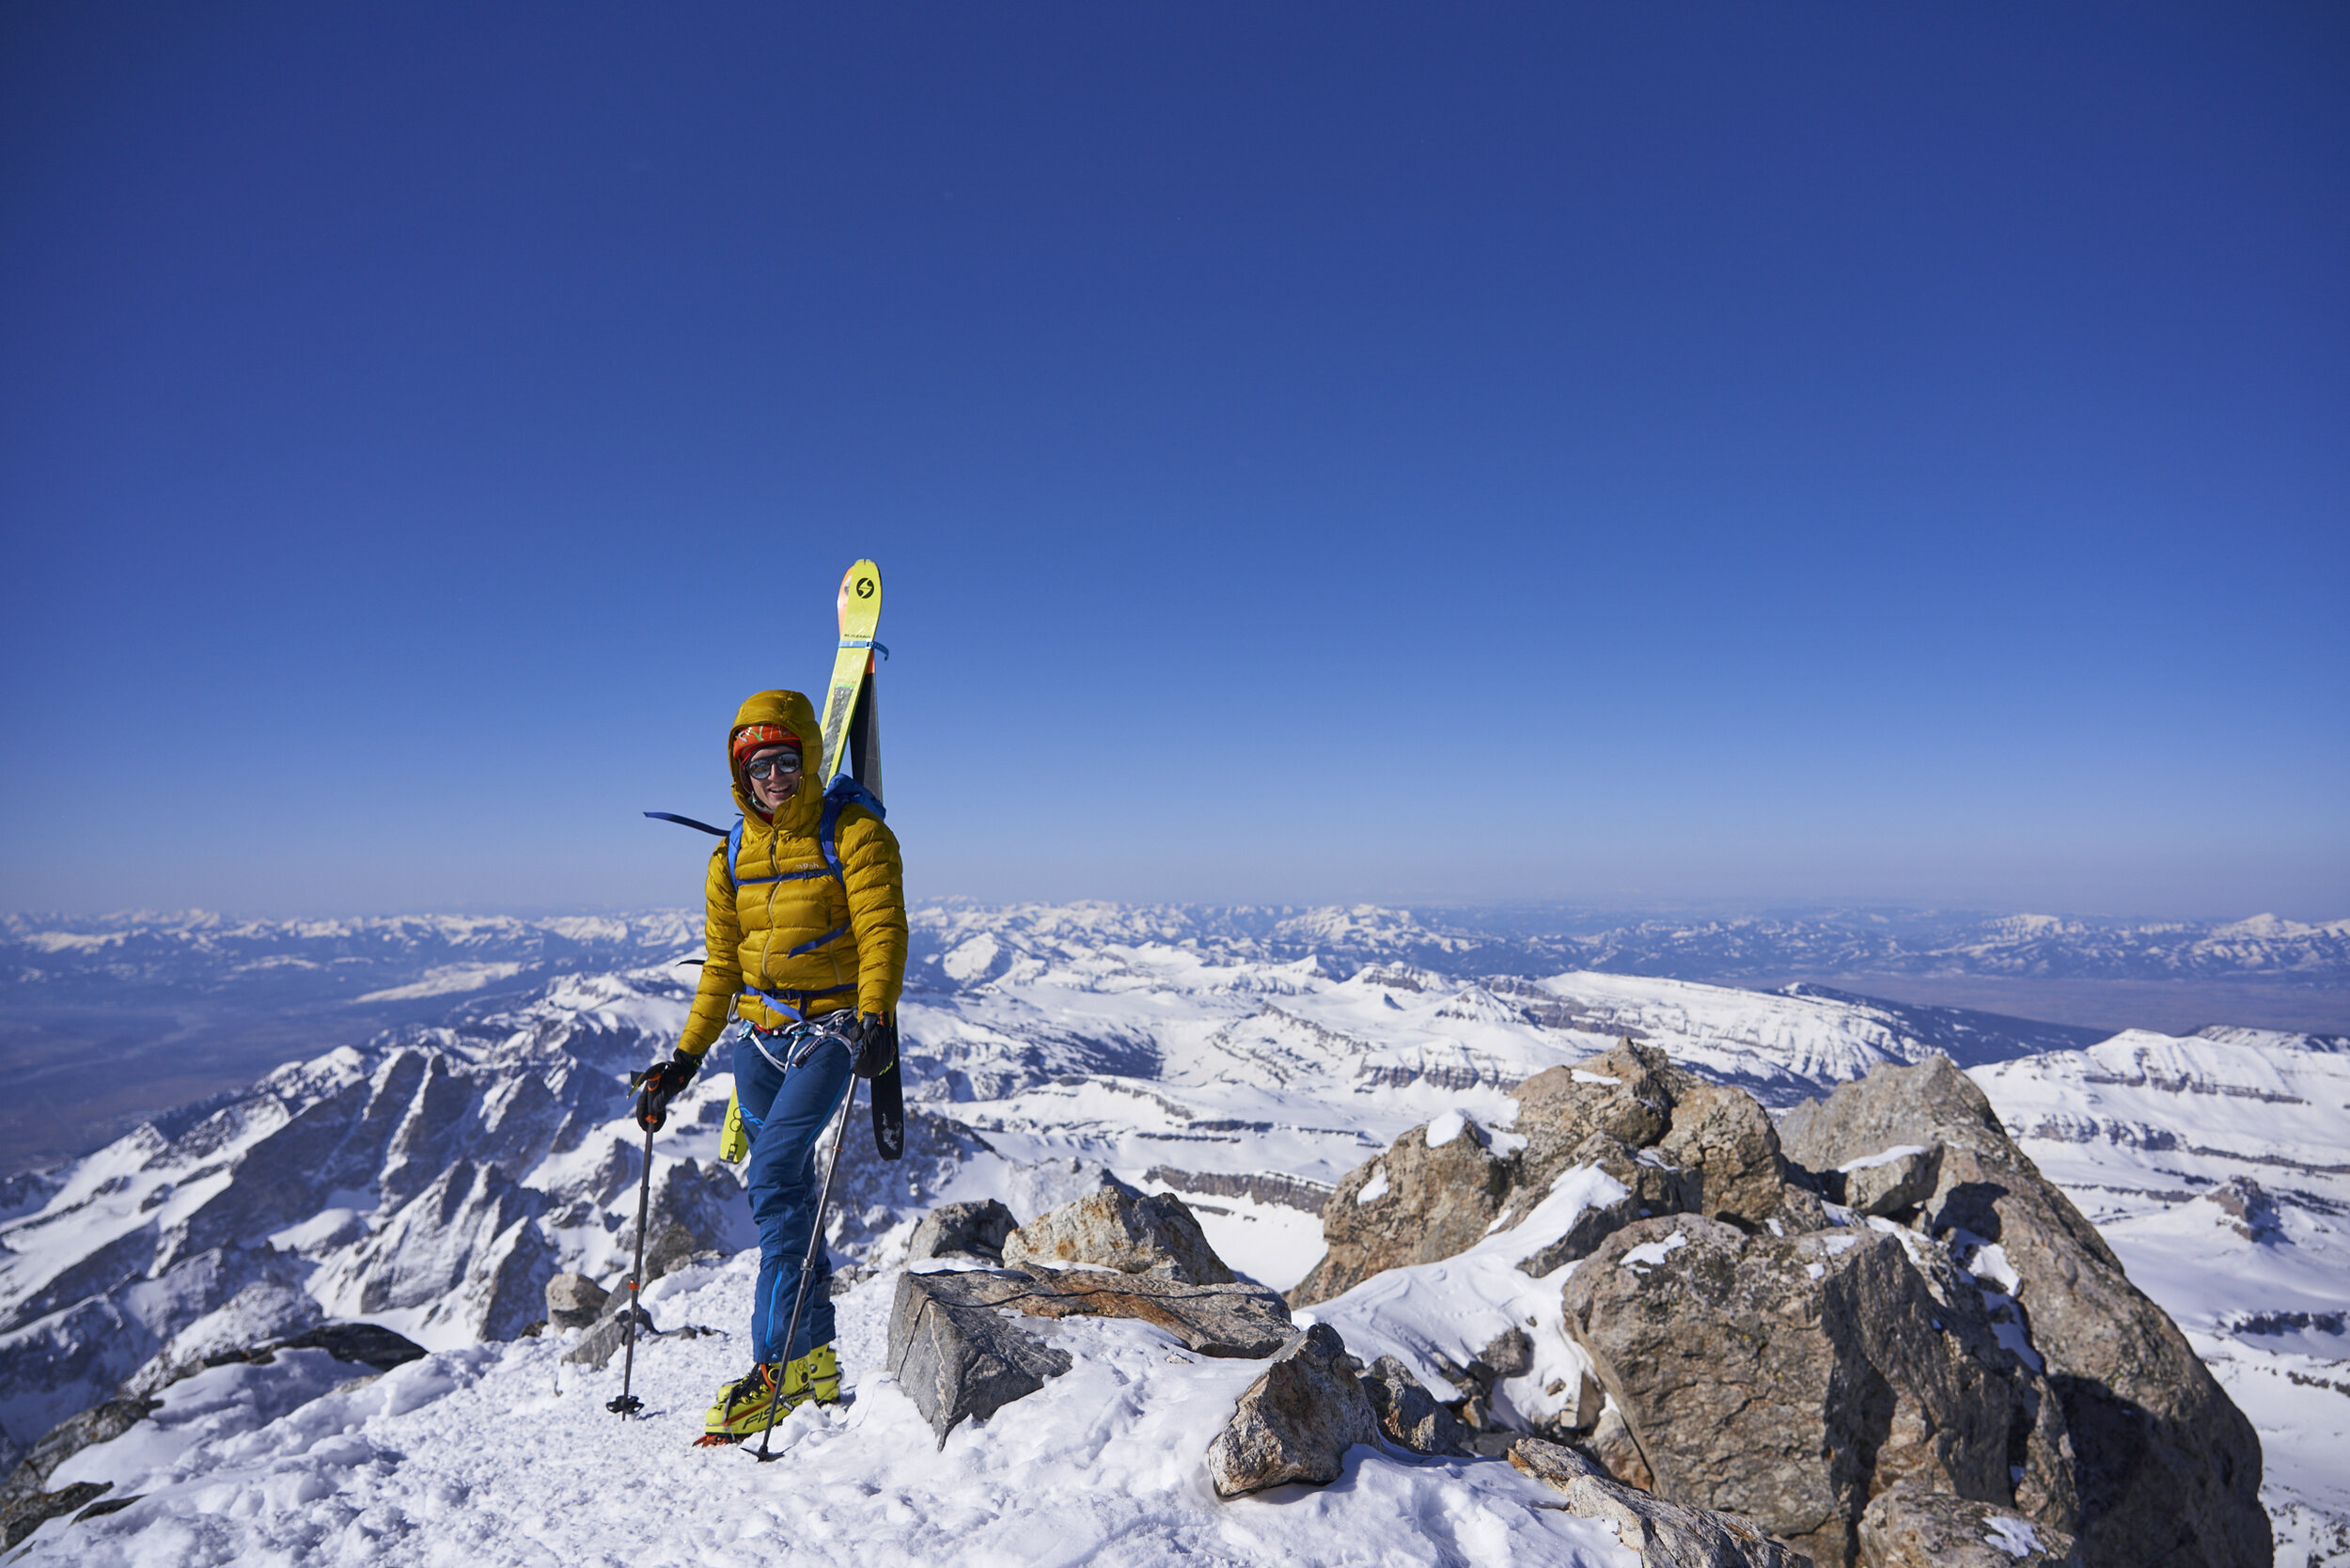 Chris on the summit of the Grand Teton